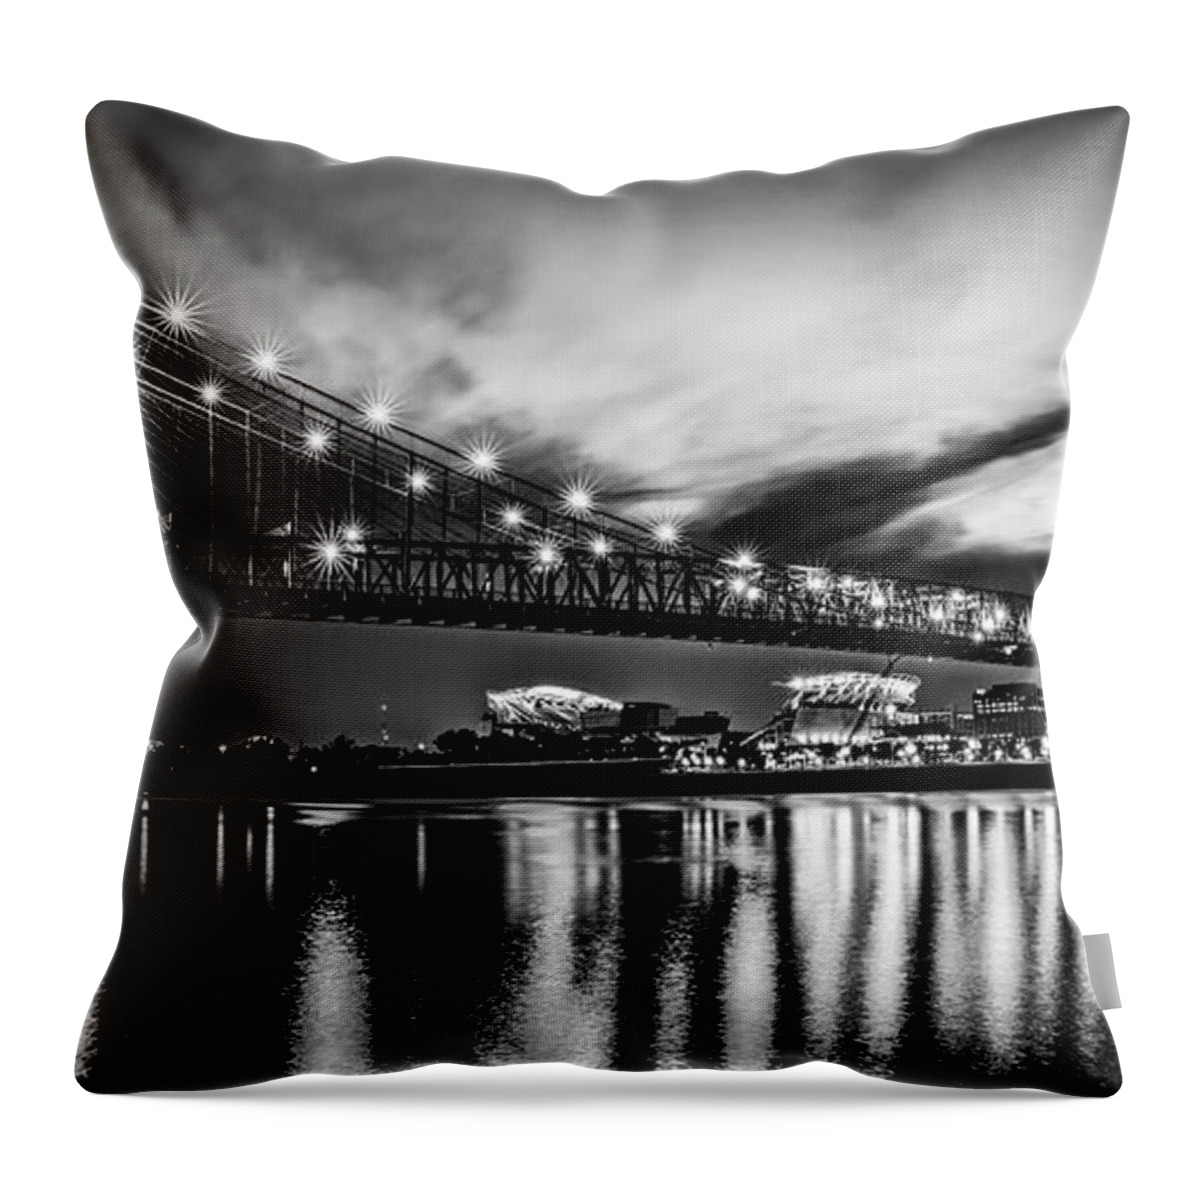 Cincinnati Ohio Throw Pillow featuring the photograph Cincinnati Ohio Roebling Bridge Panorama - Black and White by Gregory Ballos